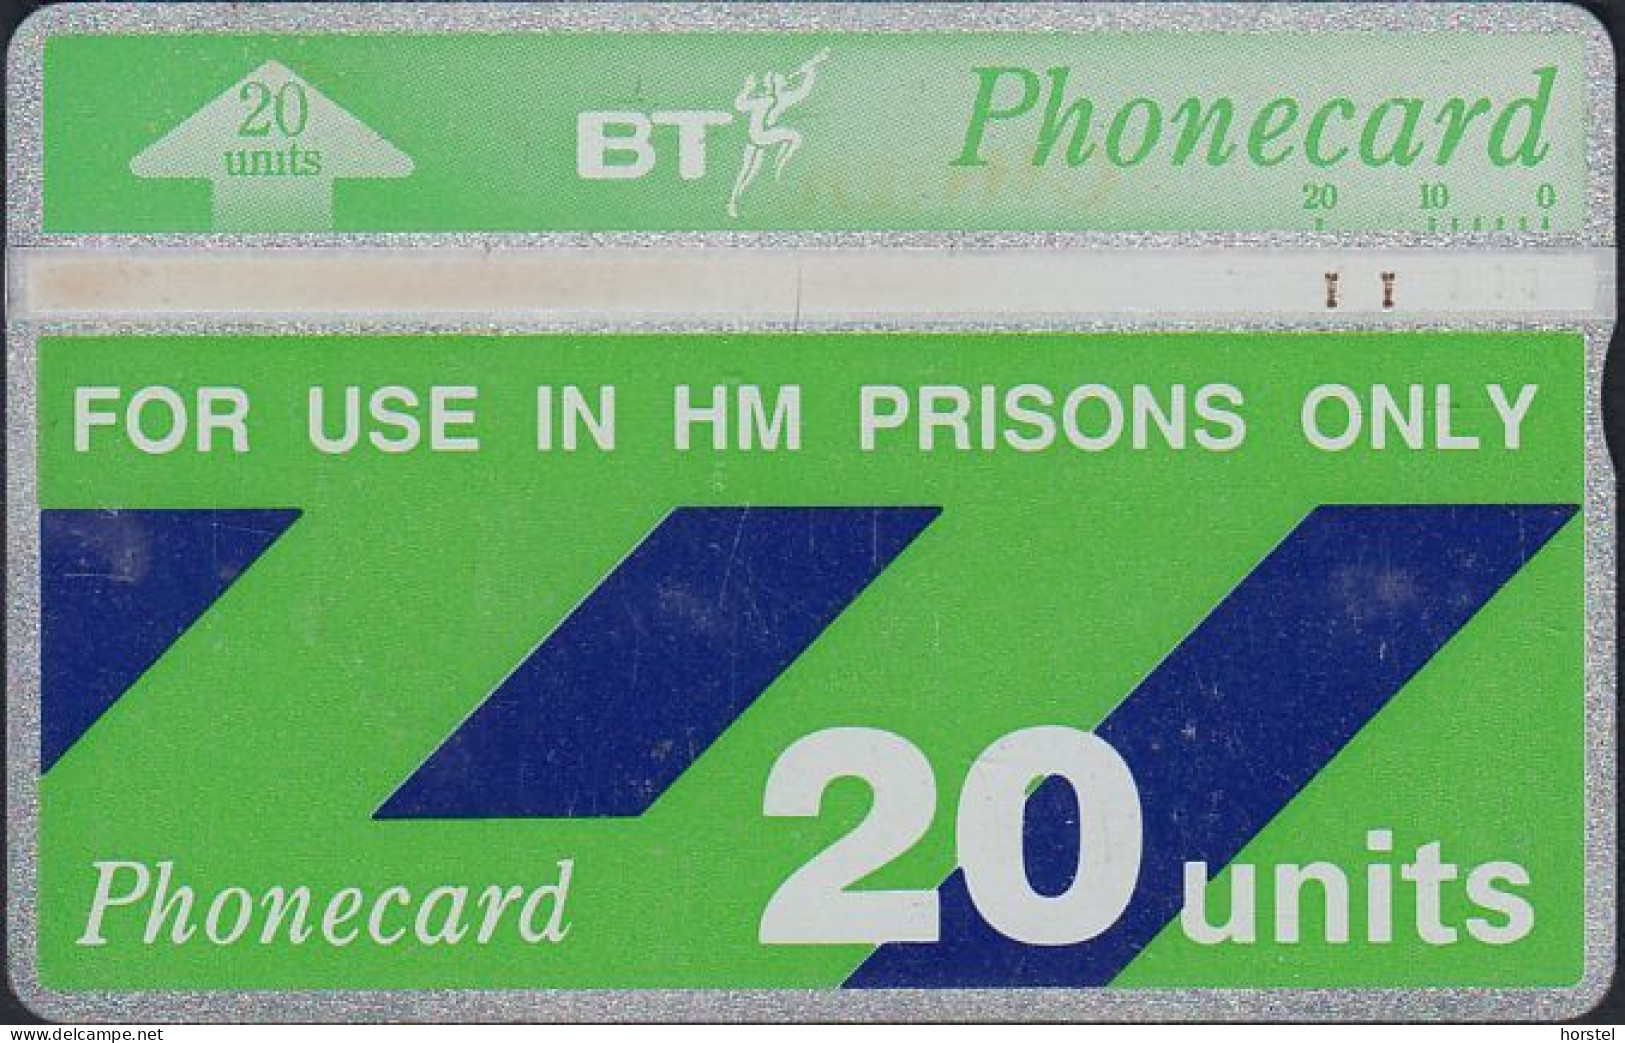 UK - British Telecom L&G H.M. Prison Card CUP005  (212F)  20 Units - Prisons